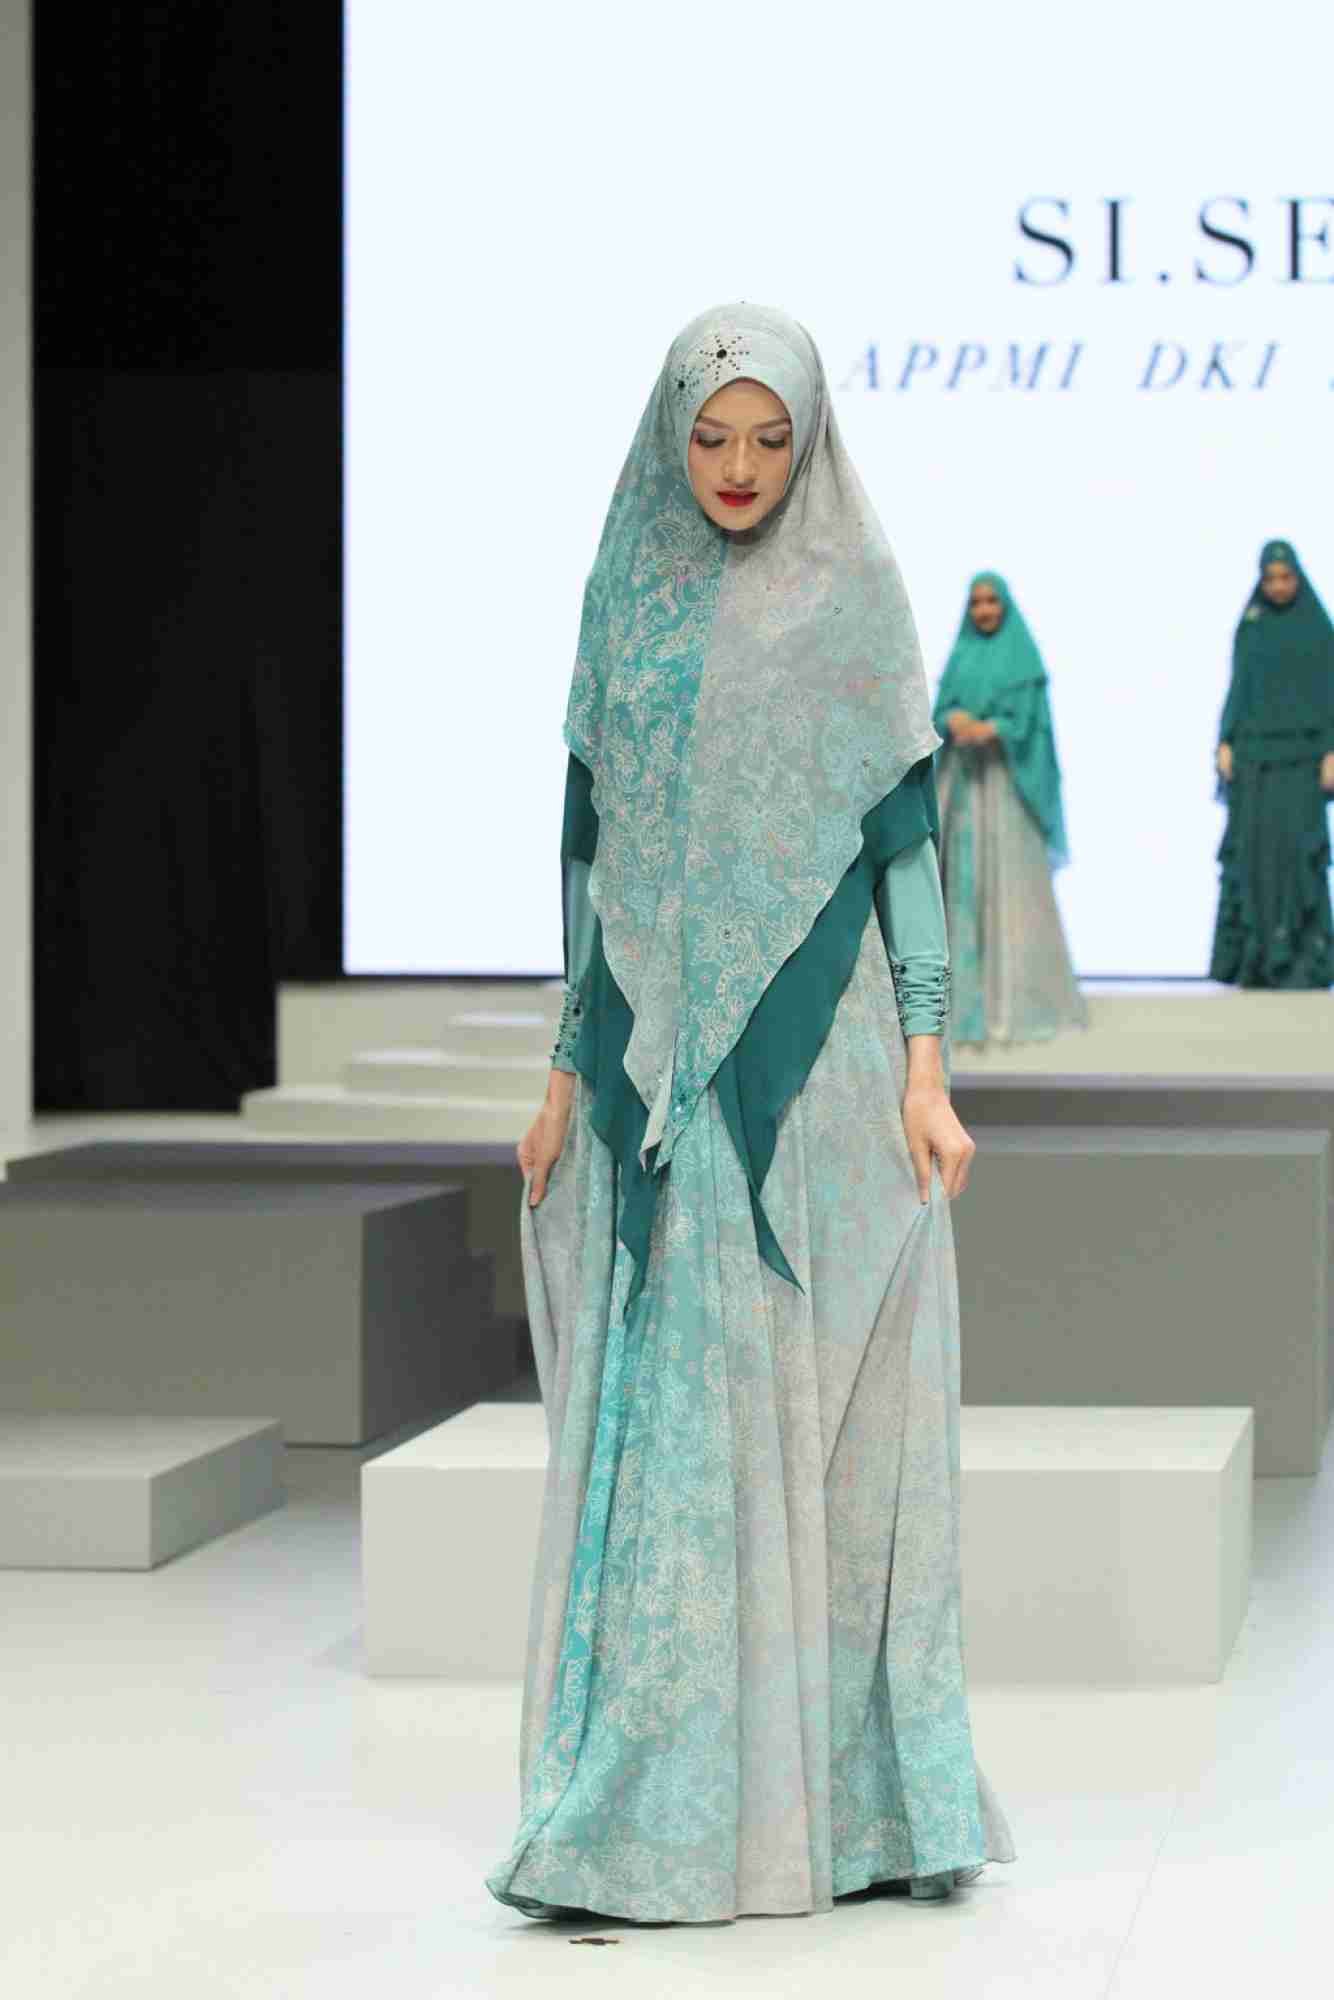 Model baju batik gamis syar’i fresh